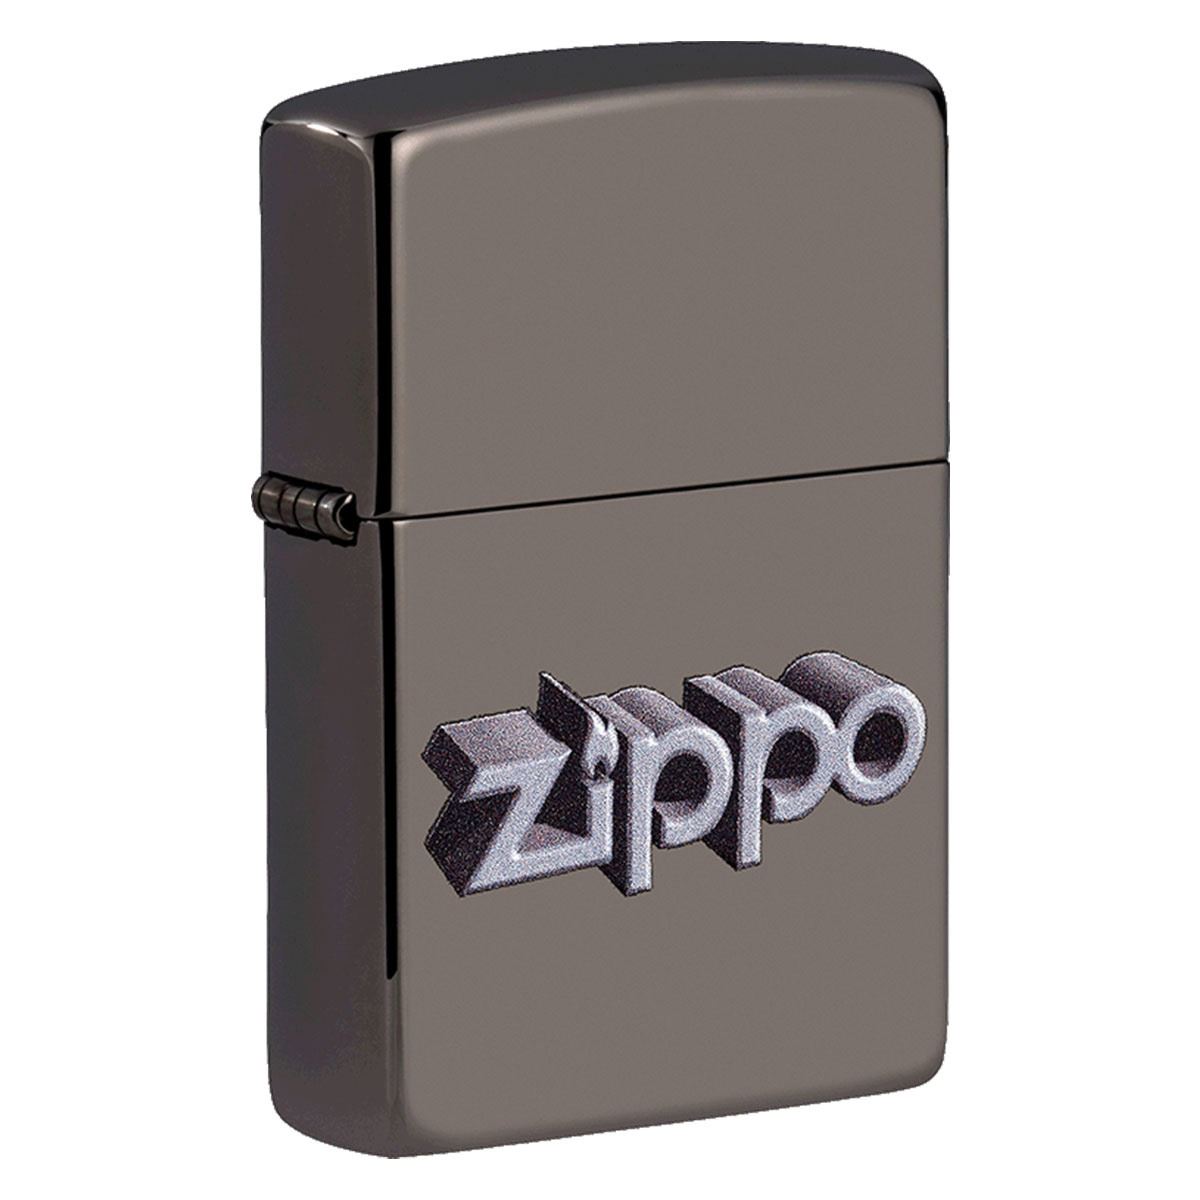 Gasolina Zippo para Mecheros Zippo - GB The Green Brand